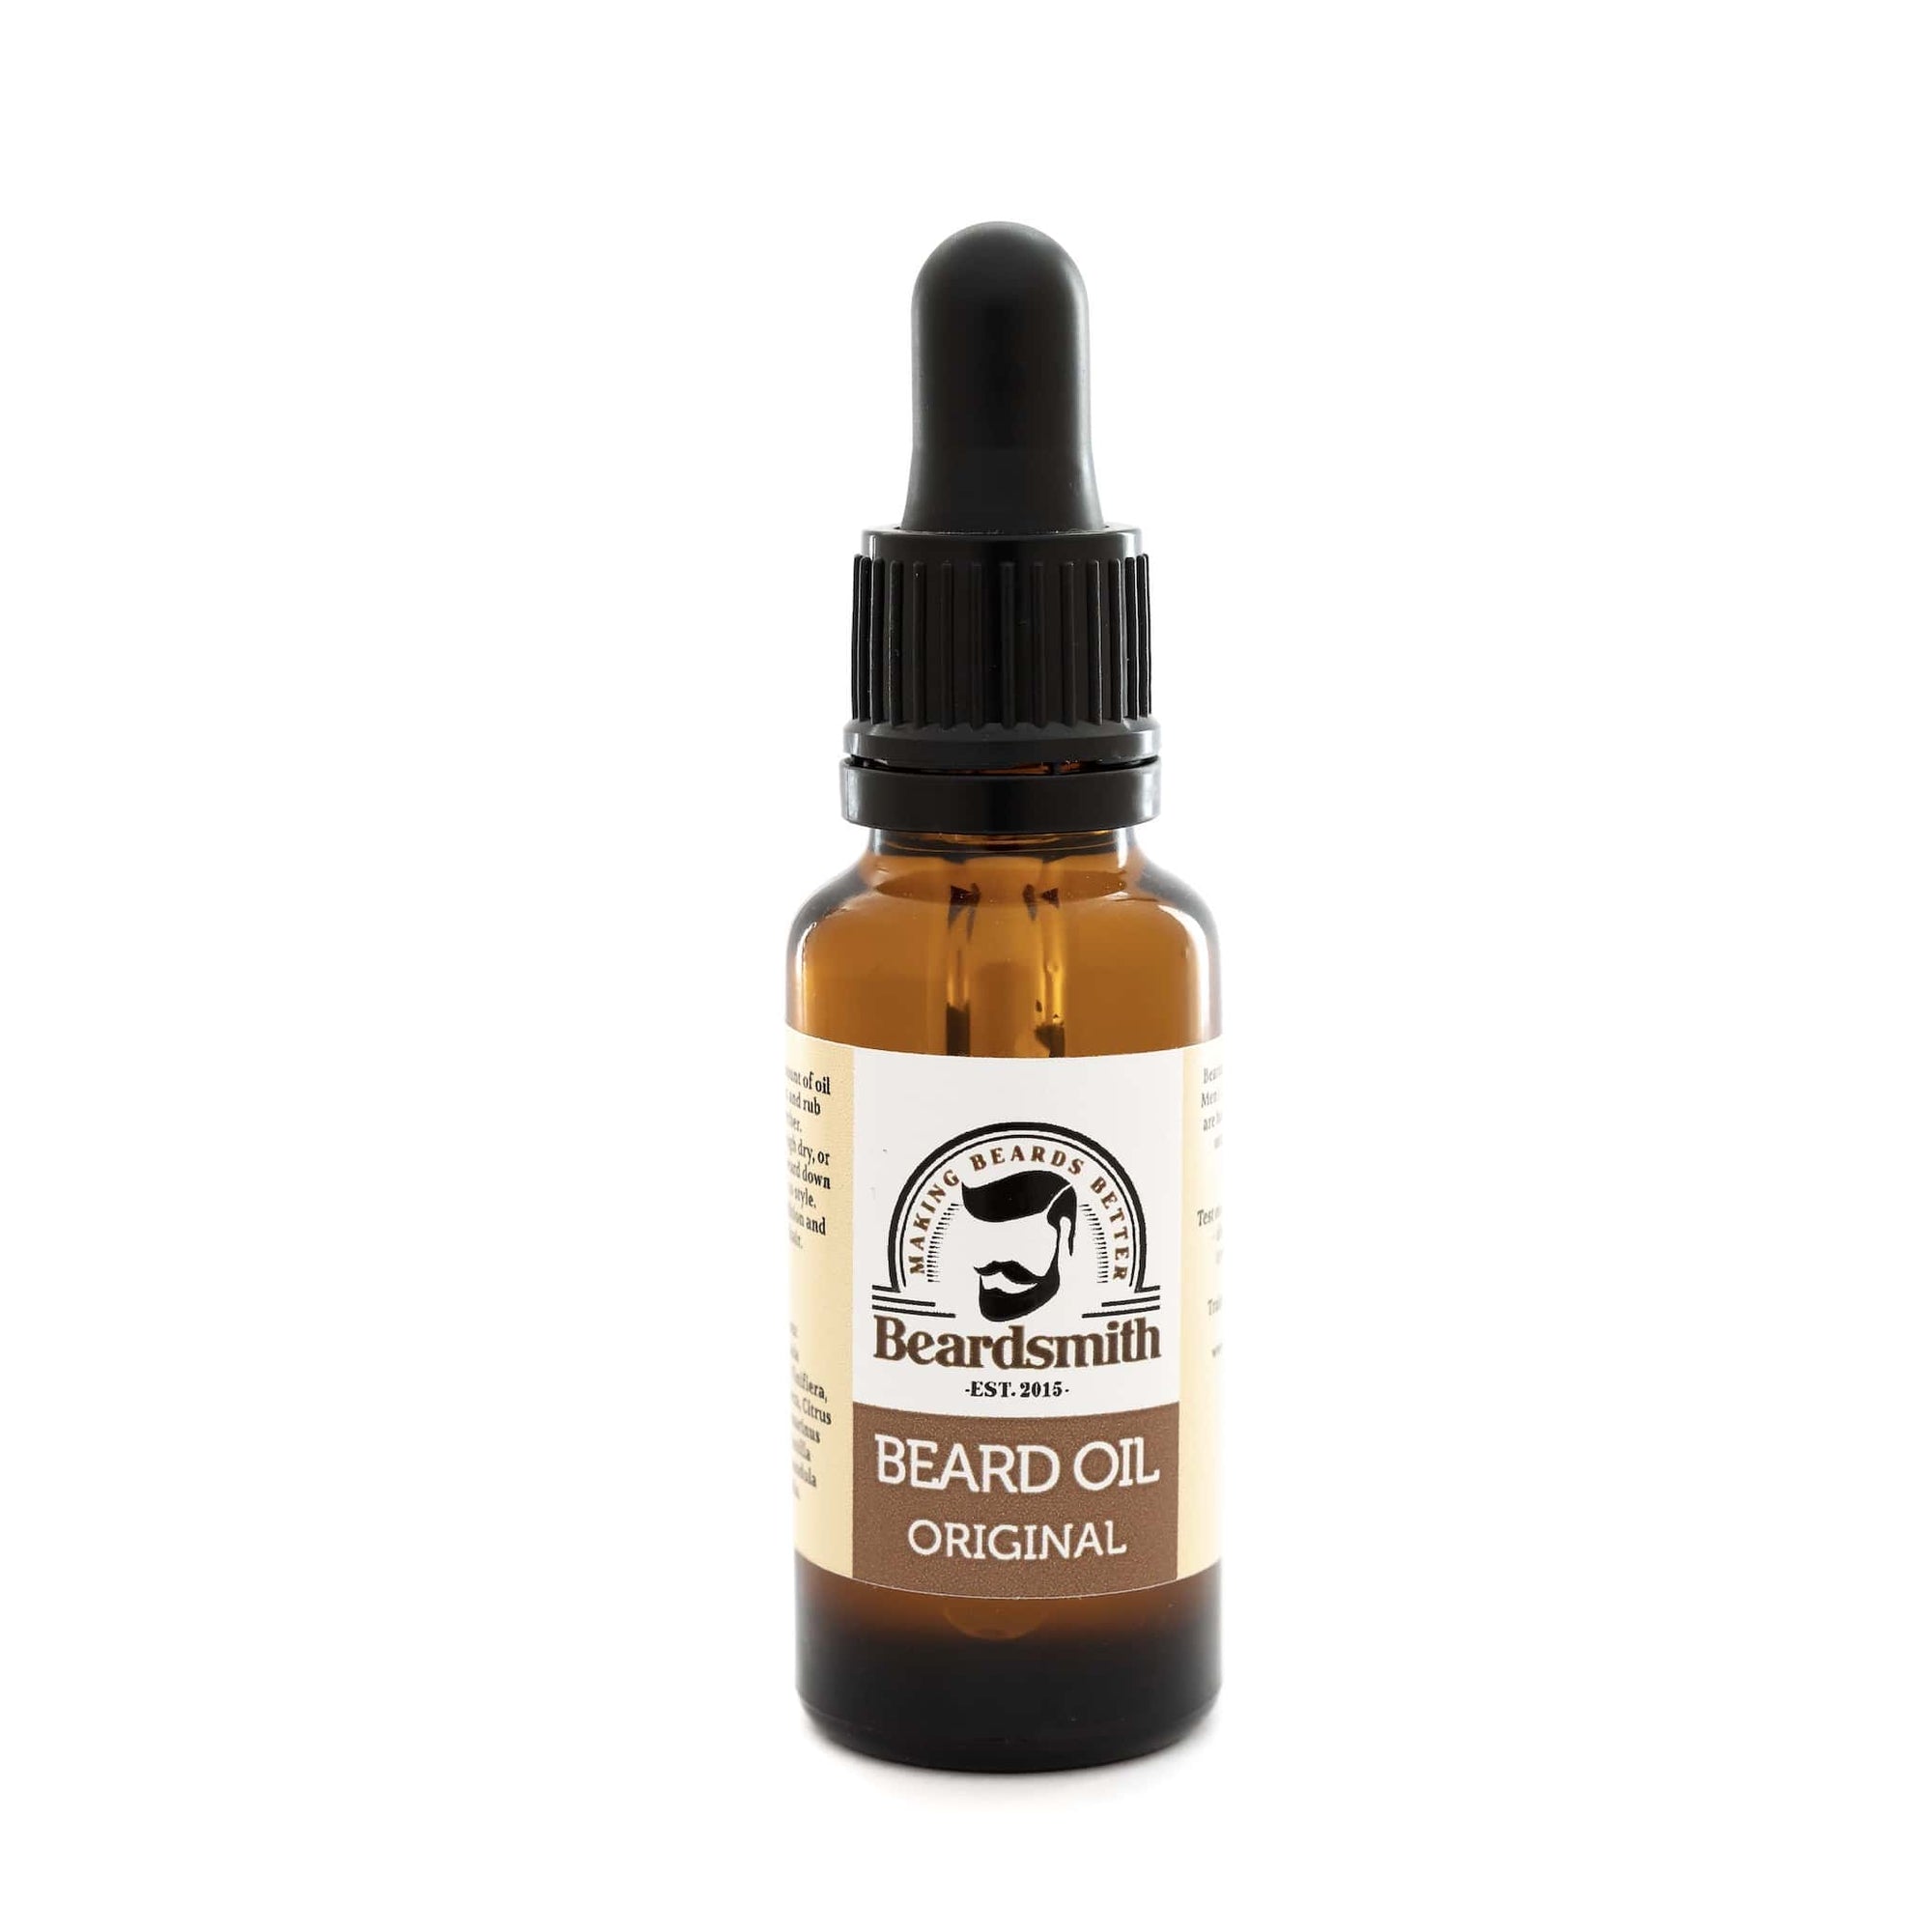 Beardsmith beard oil original scent 25ml